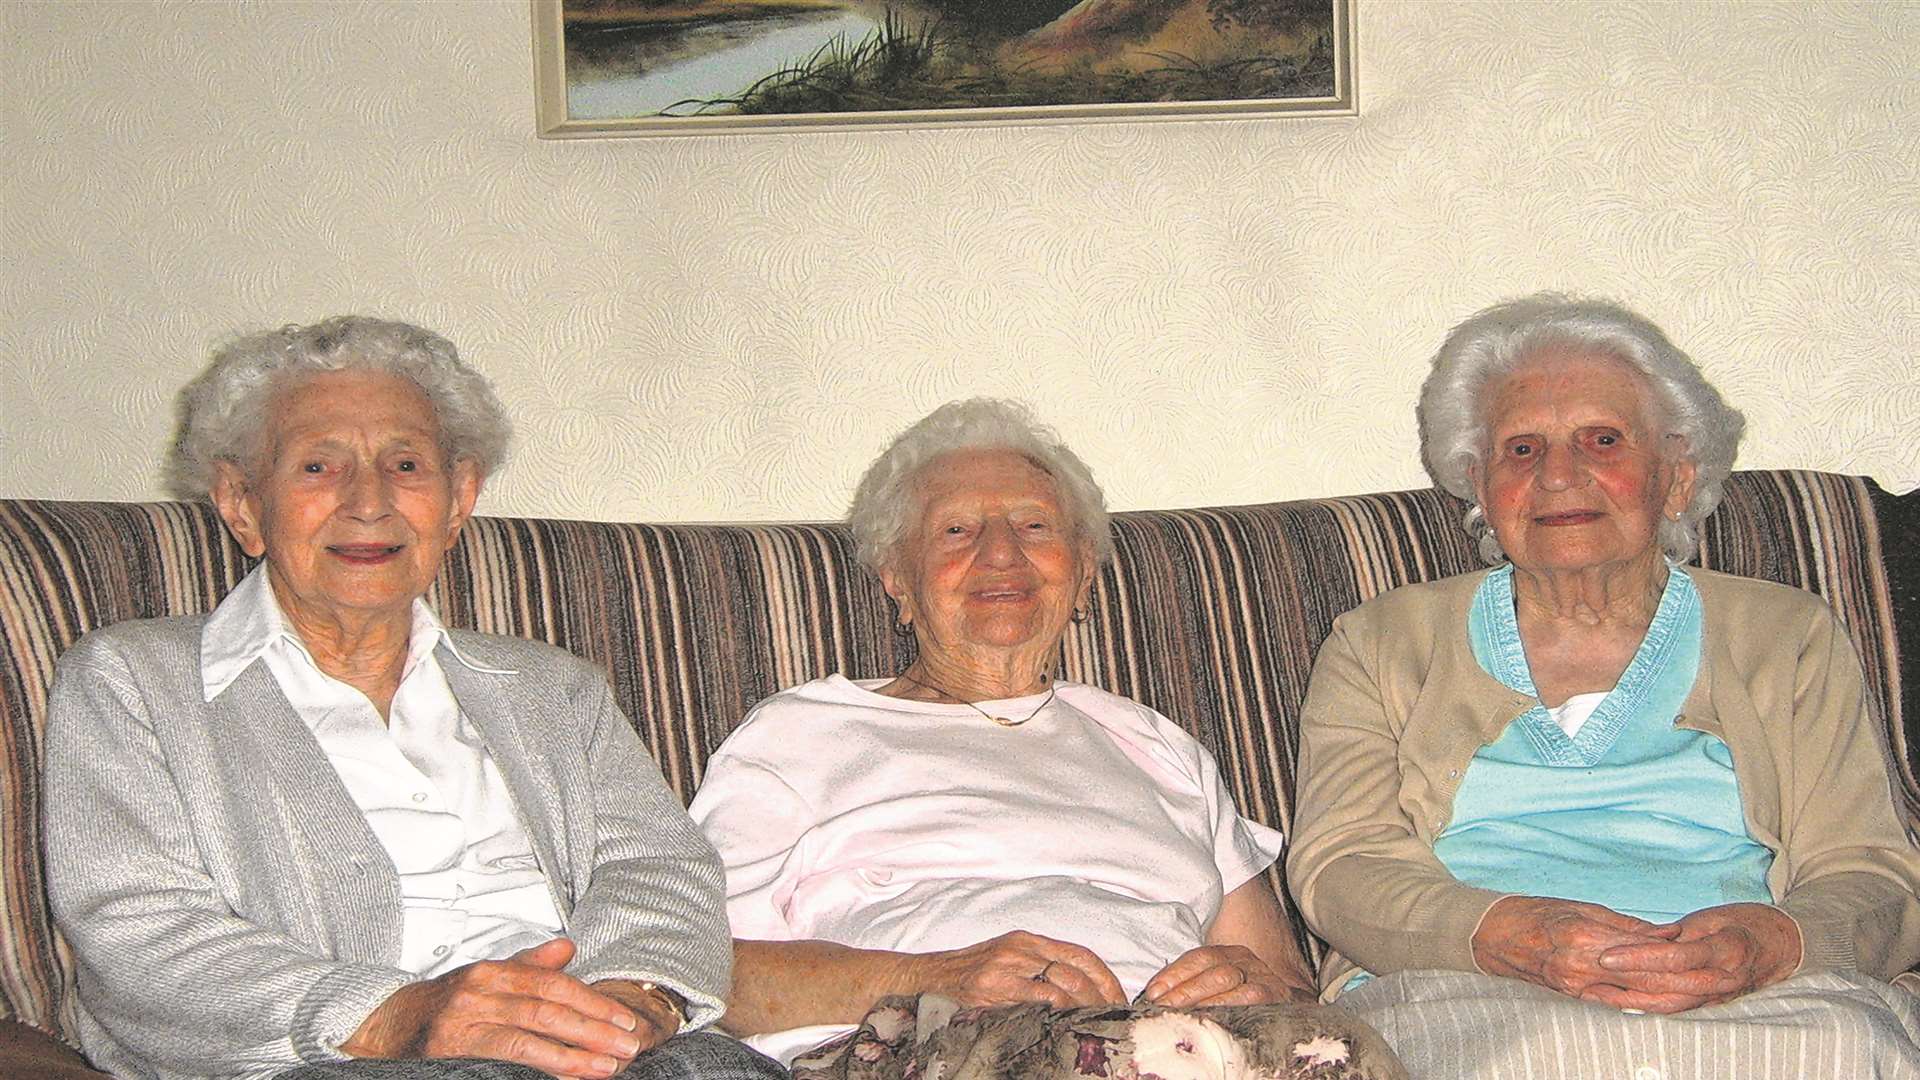 Sisters Gwendoline, Freda and Hilda. Taken in 2010 at 41 Malling Road, Snodland.